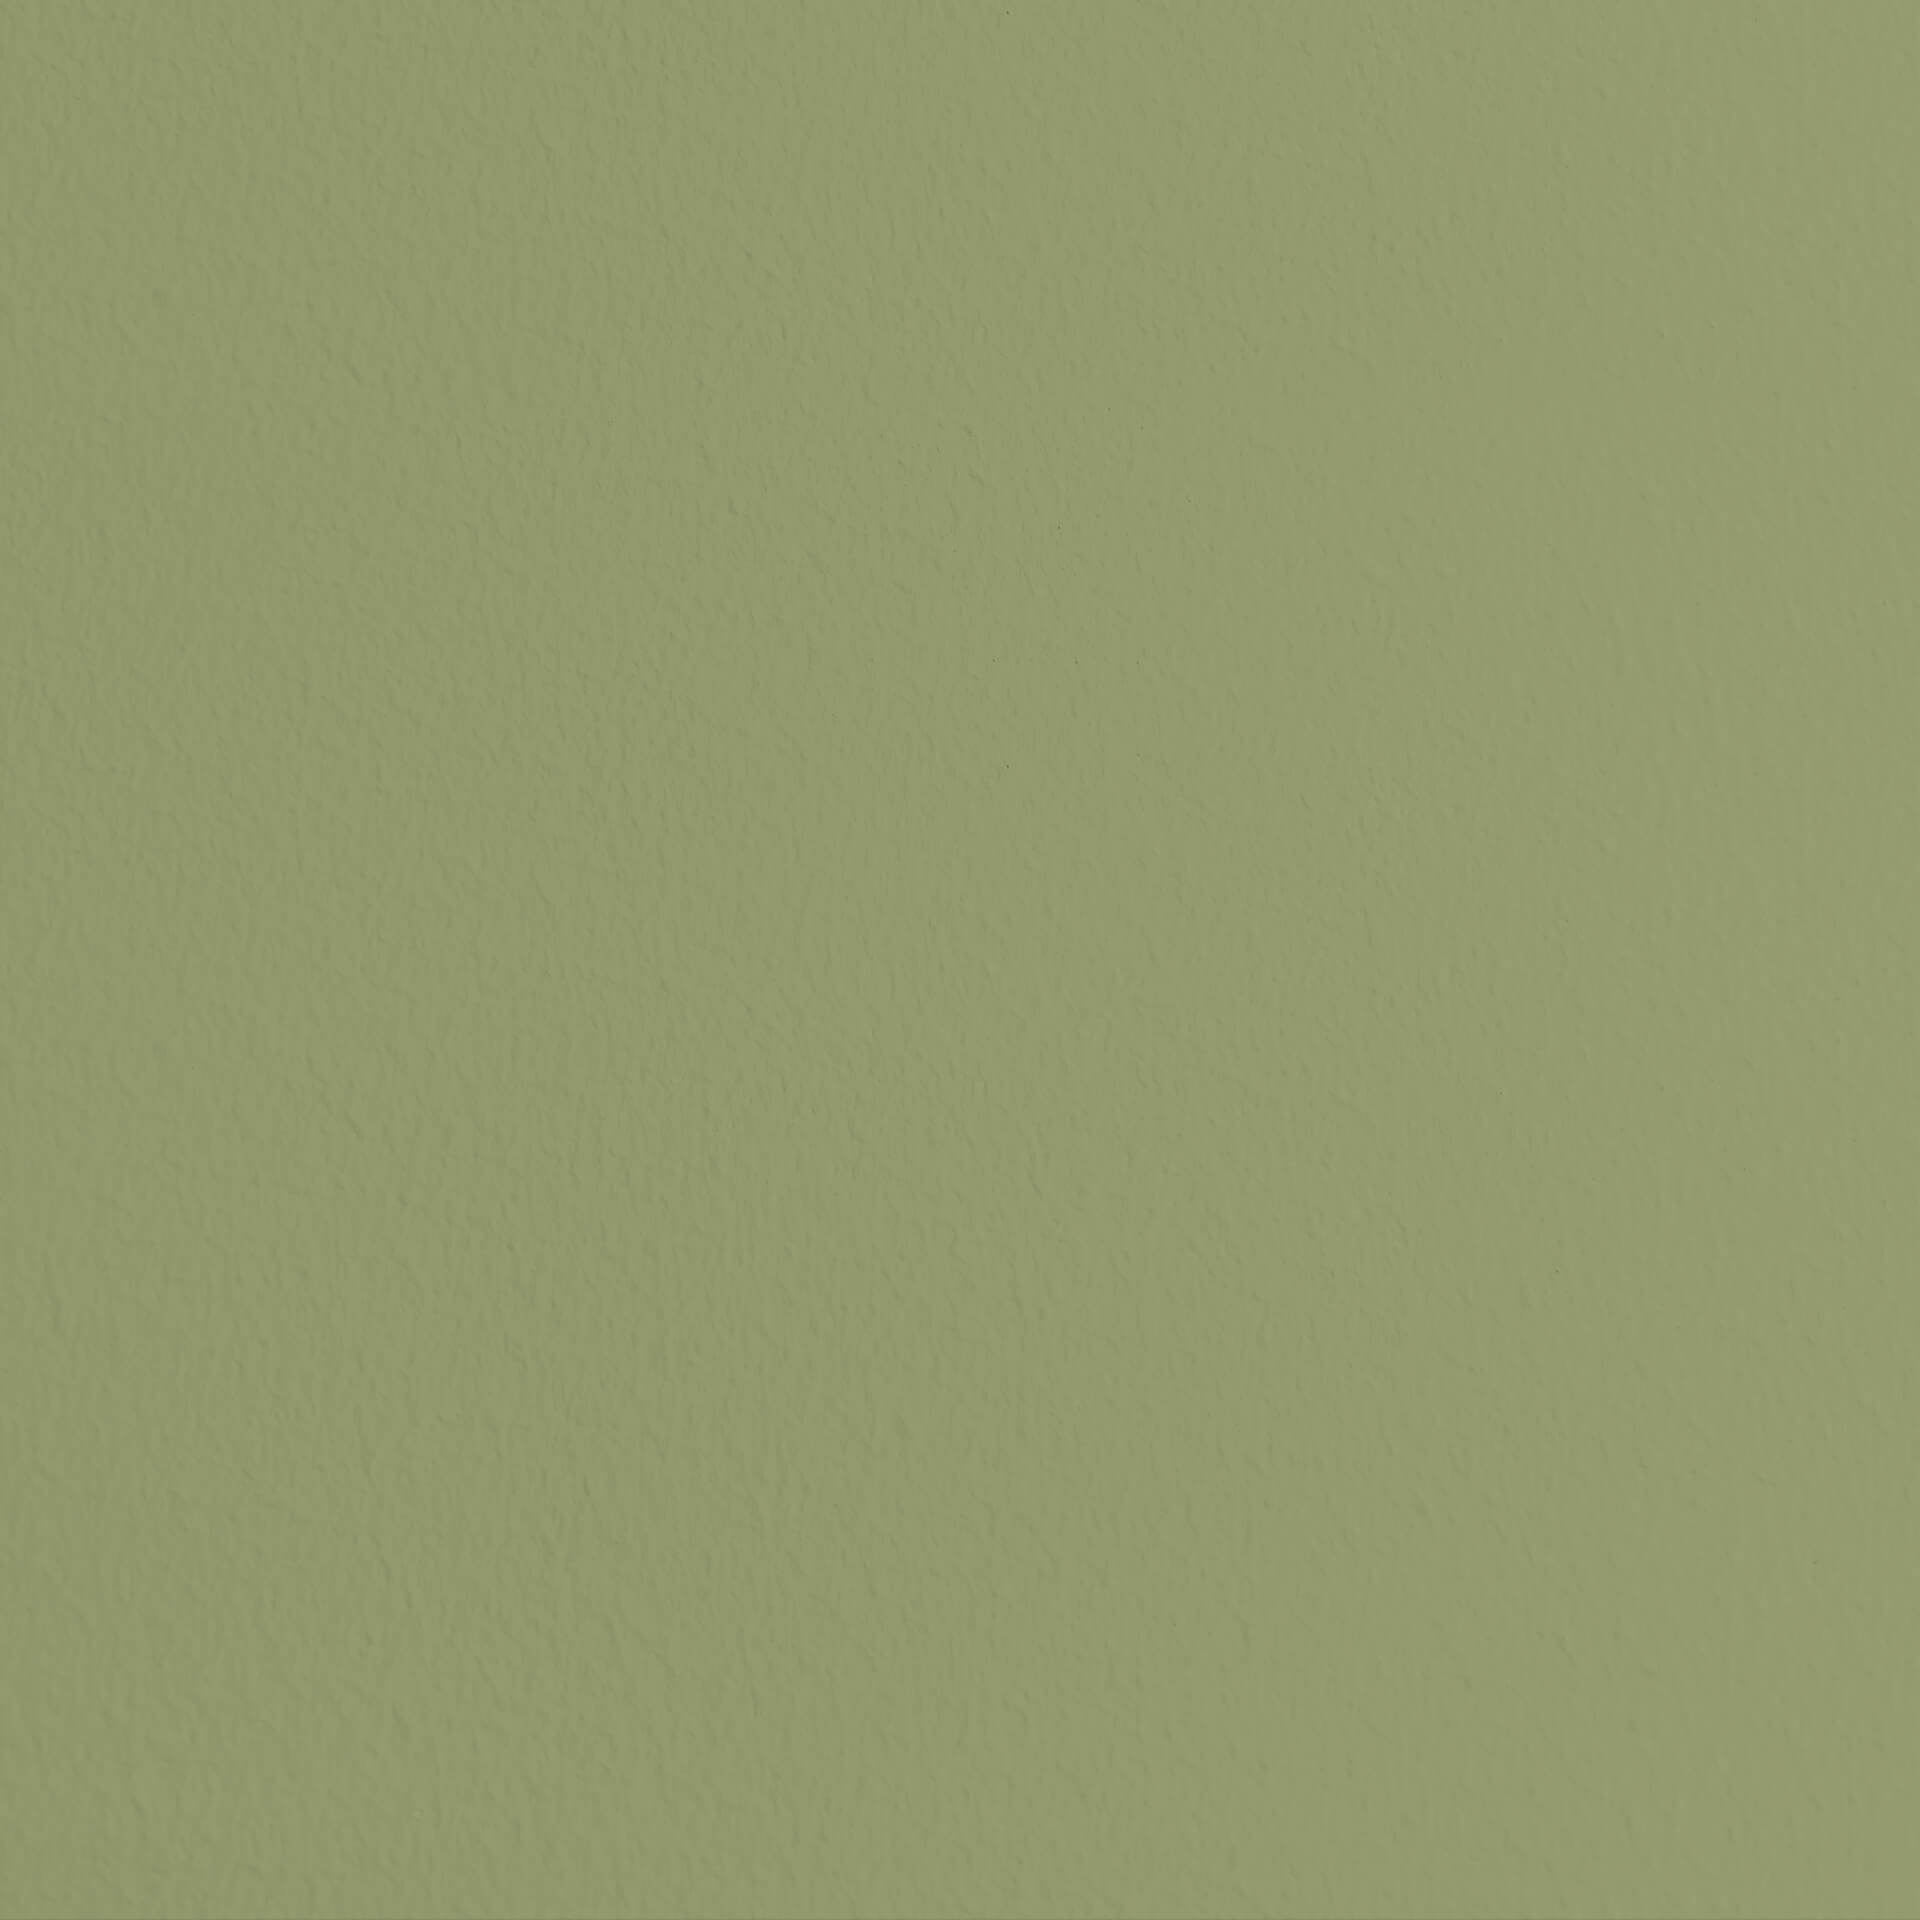 Mylands Stockwell Green No. 203 - Marble Matt Emulsion / Wandfarbe, 2.5L